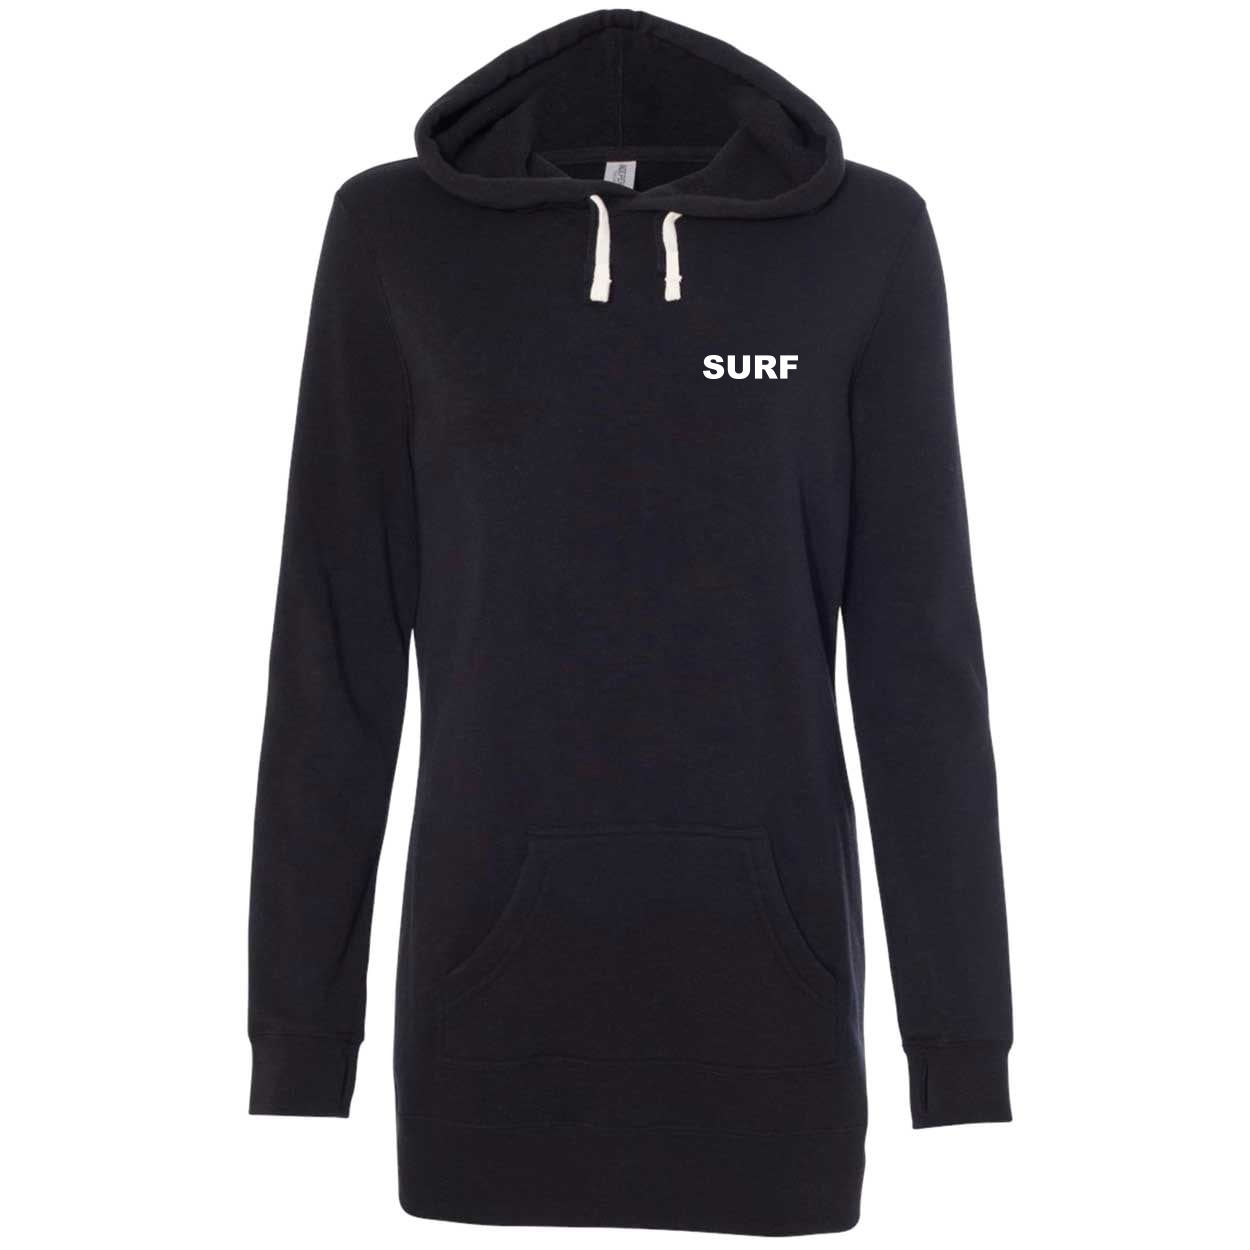 Surf Brand Logo Night Out Womens Pullover Hooded Sweatshirt Dress Black